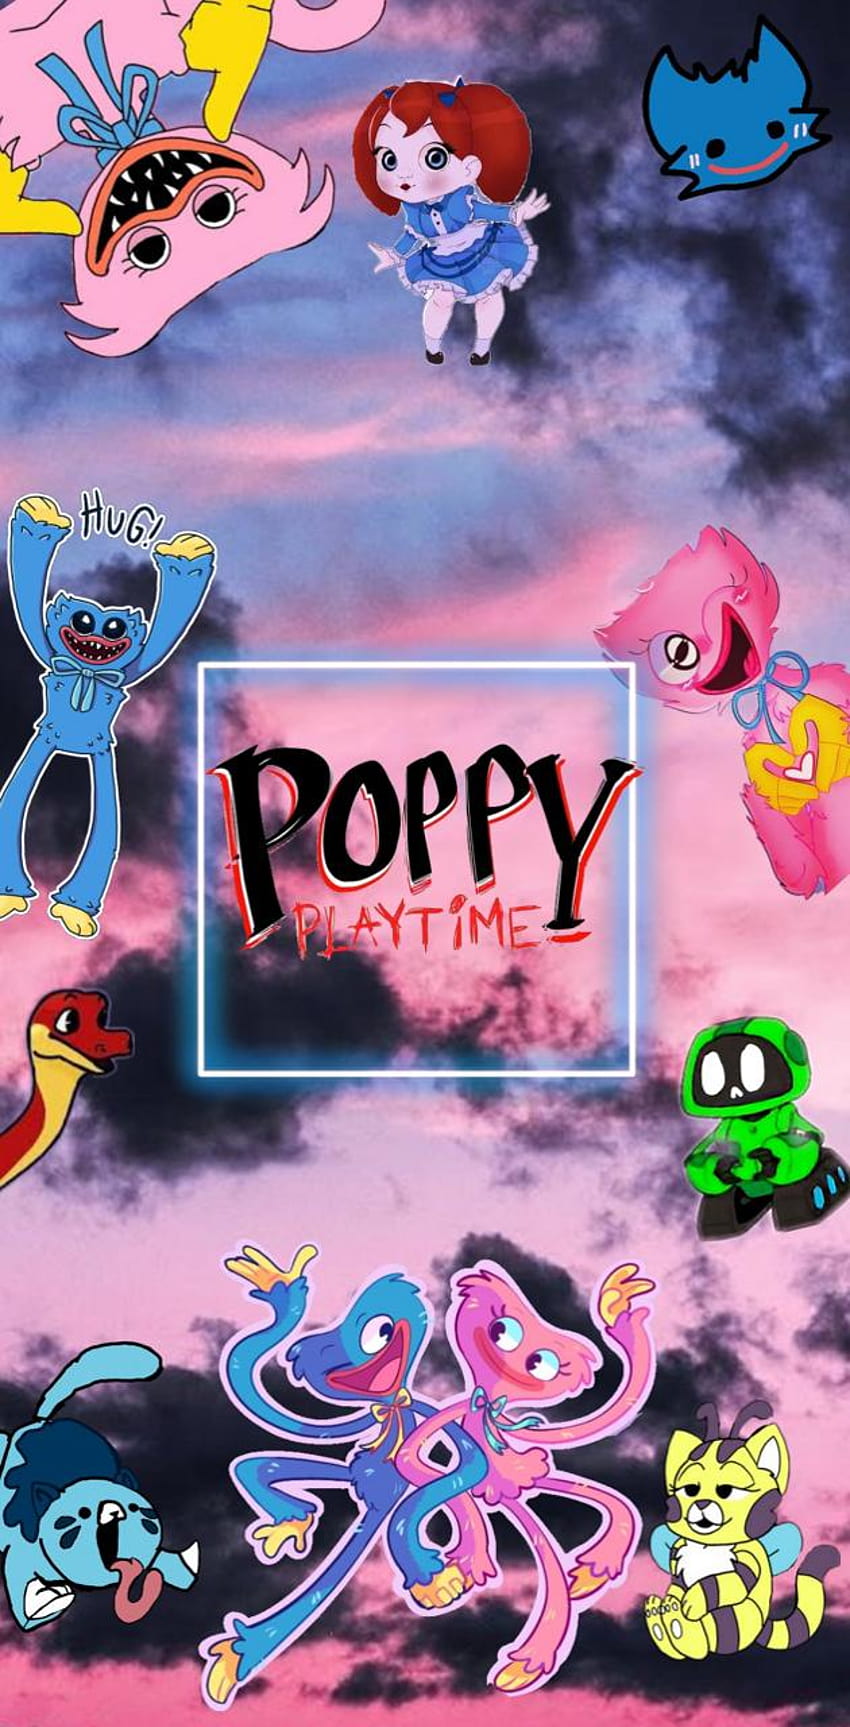 Revelada la fecha del nuevo tráiler de Poppy Playtime Chapter 3?